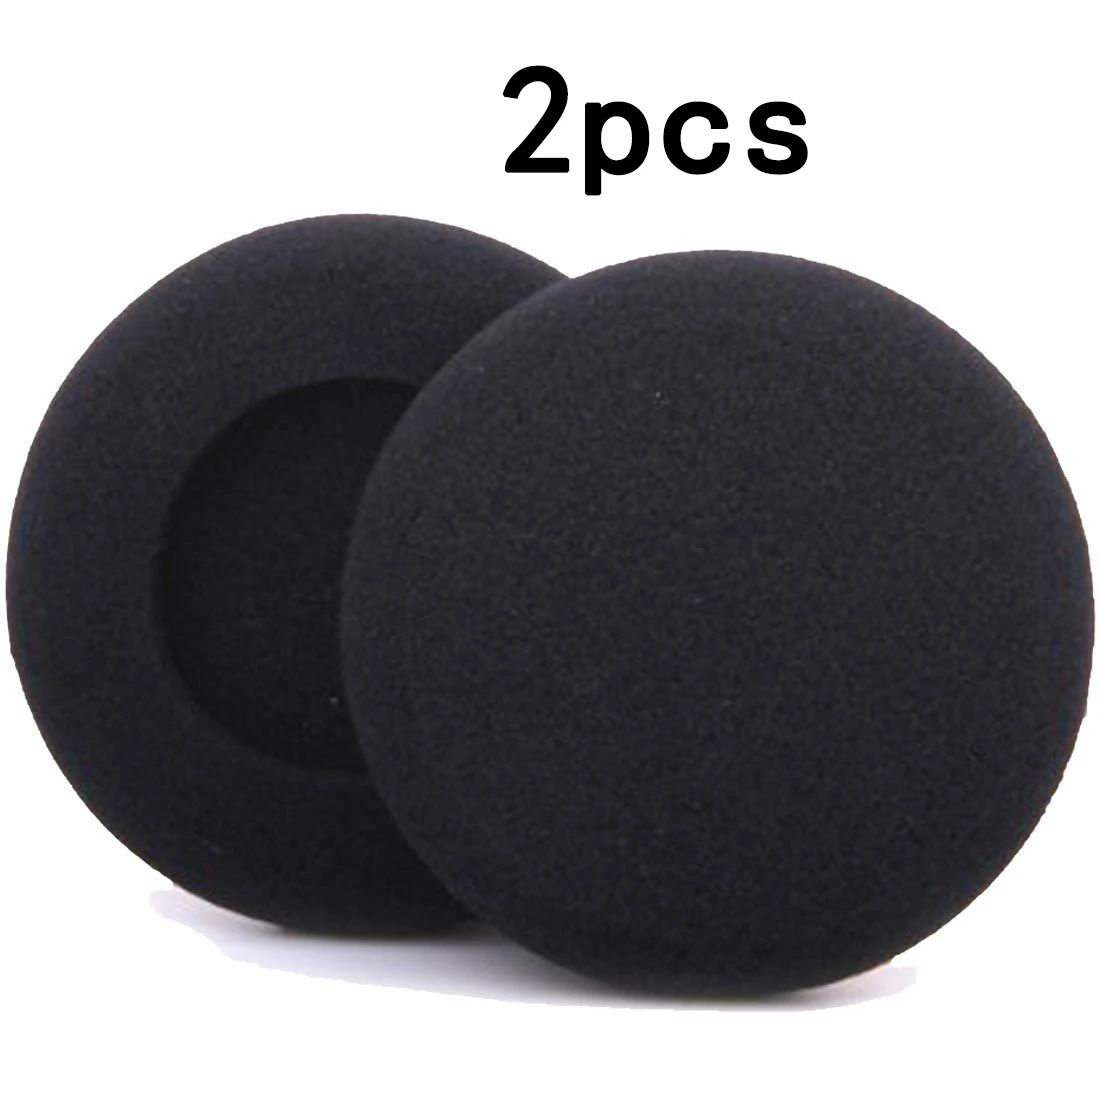 

2pcs Ear Pads High-elastic Sponge Foam Cushions Earmuffs Cover For Sennheiser Headphones Headsets Earpads Optional Size: 3-6CM